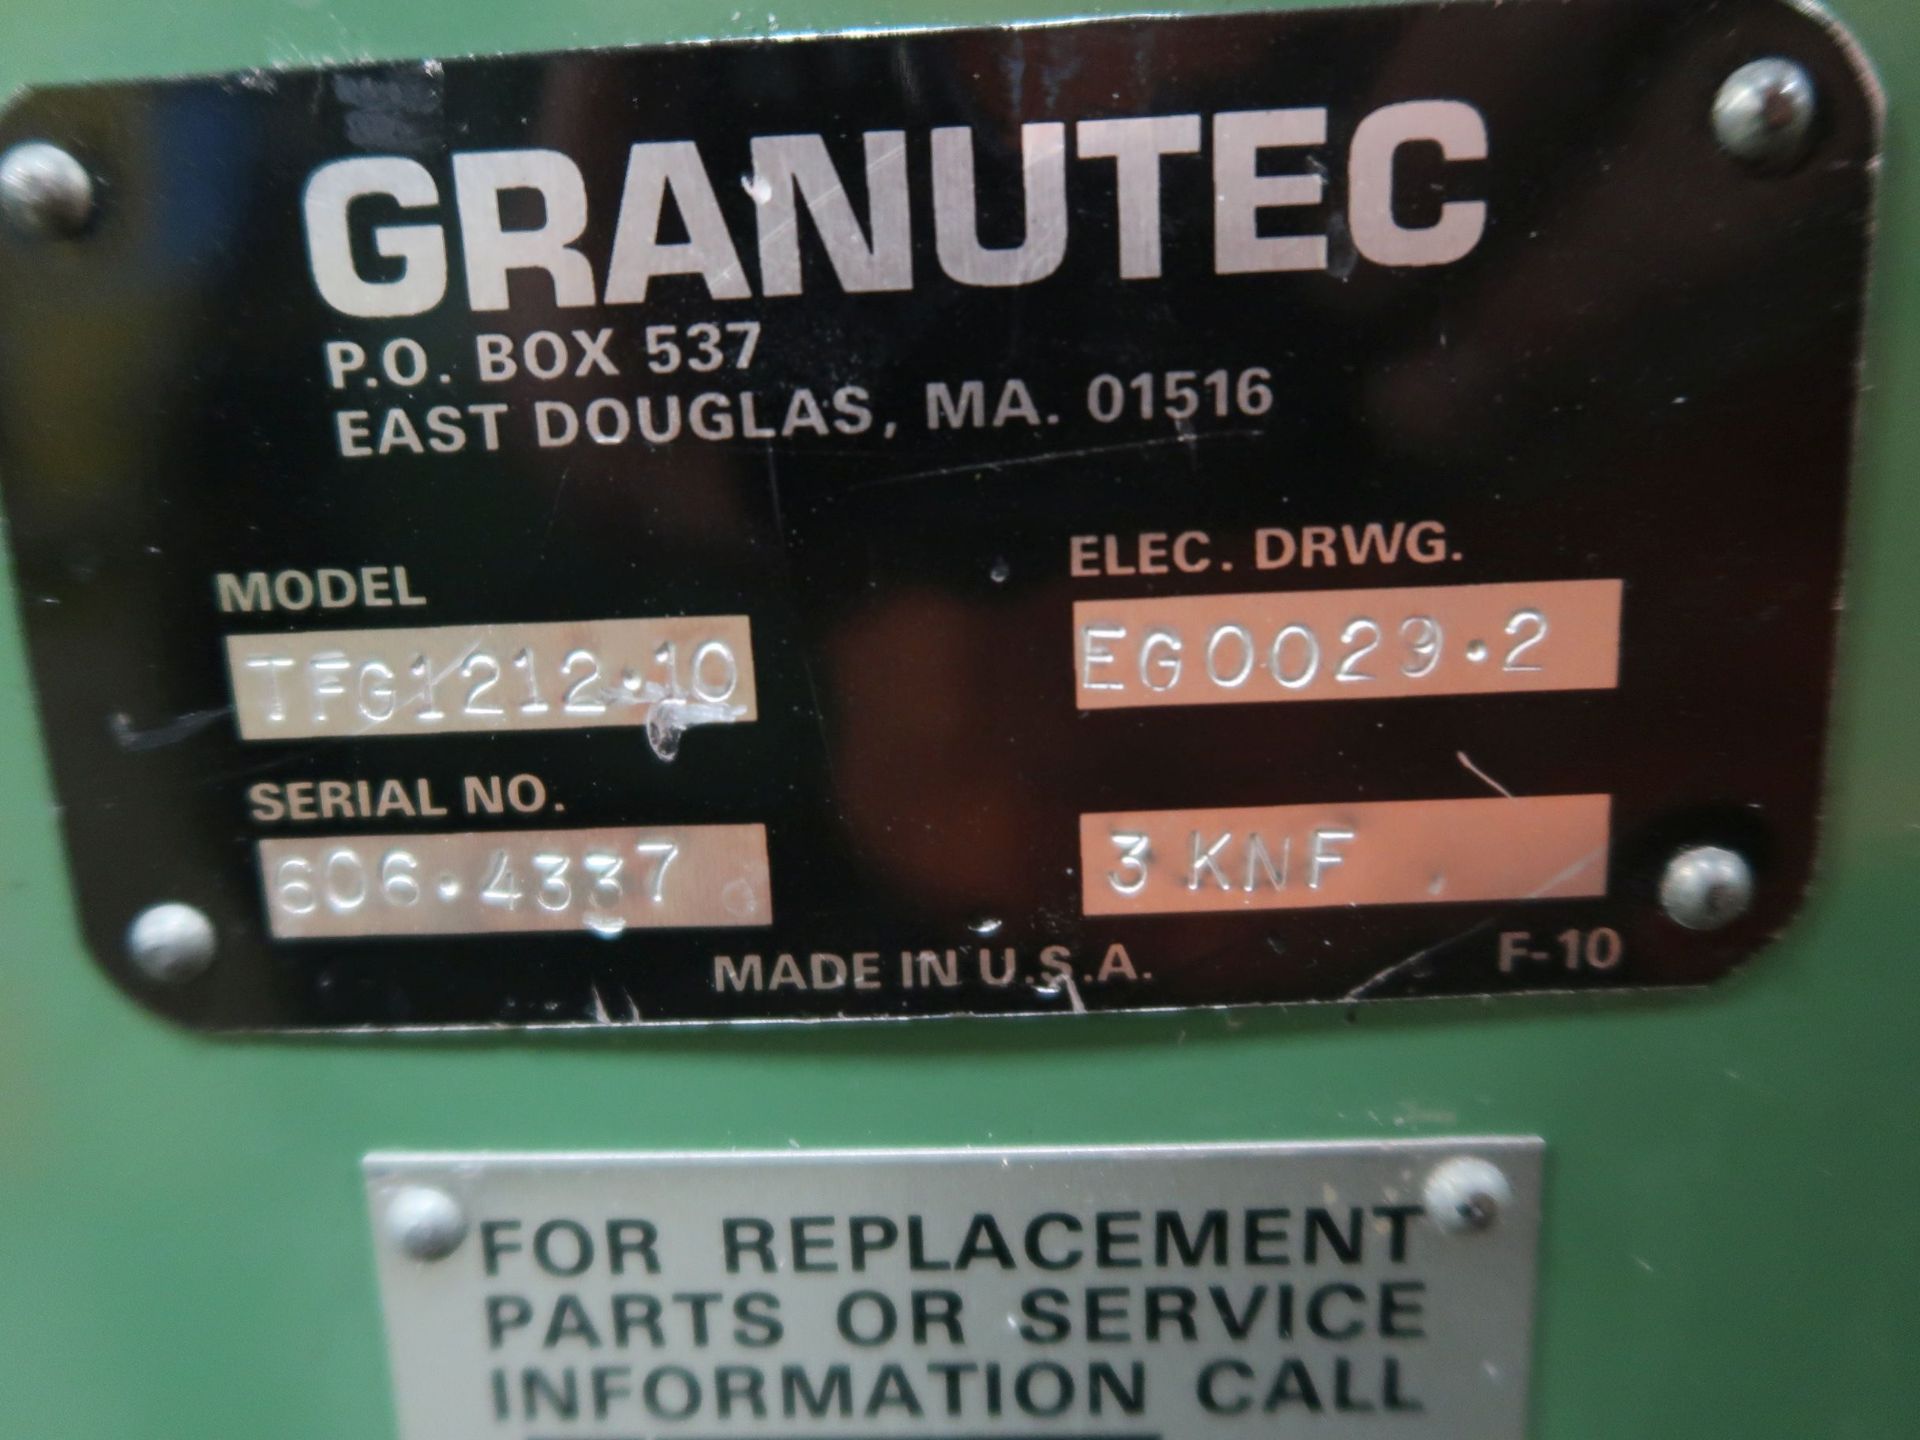 10 HP GRANUTEC MODEL TFG1212-10 GRANULATOR; S/N 606.4337 - Image 5 of 5